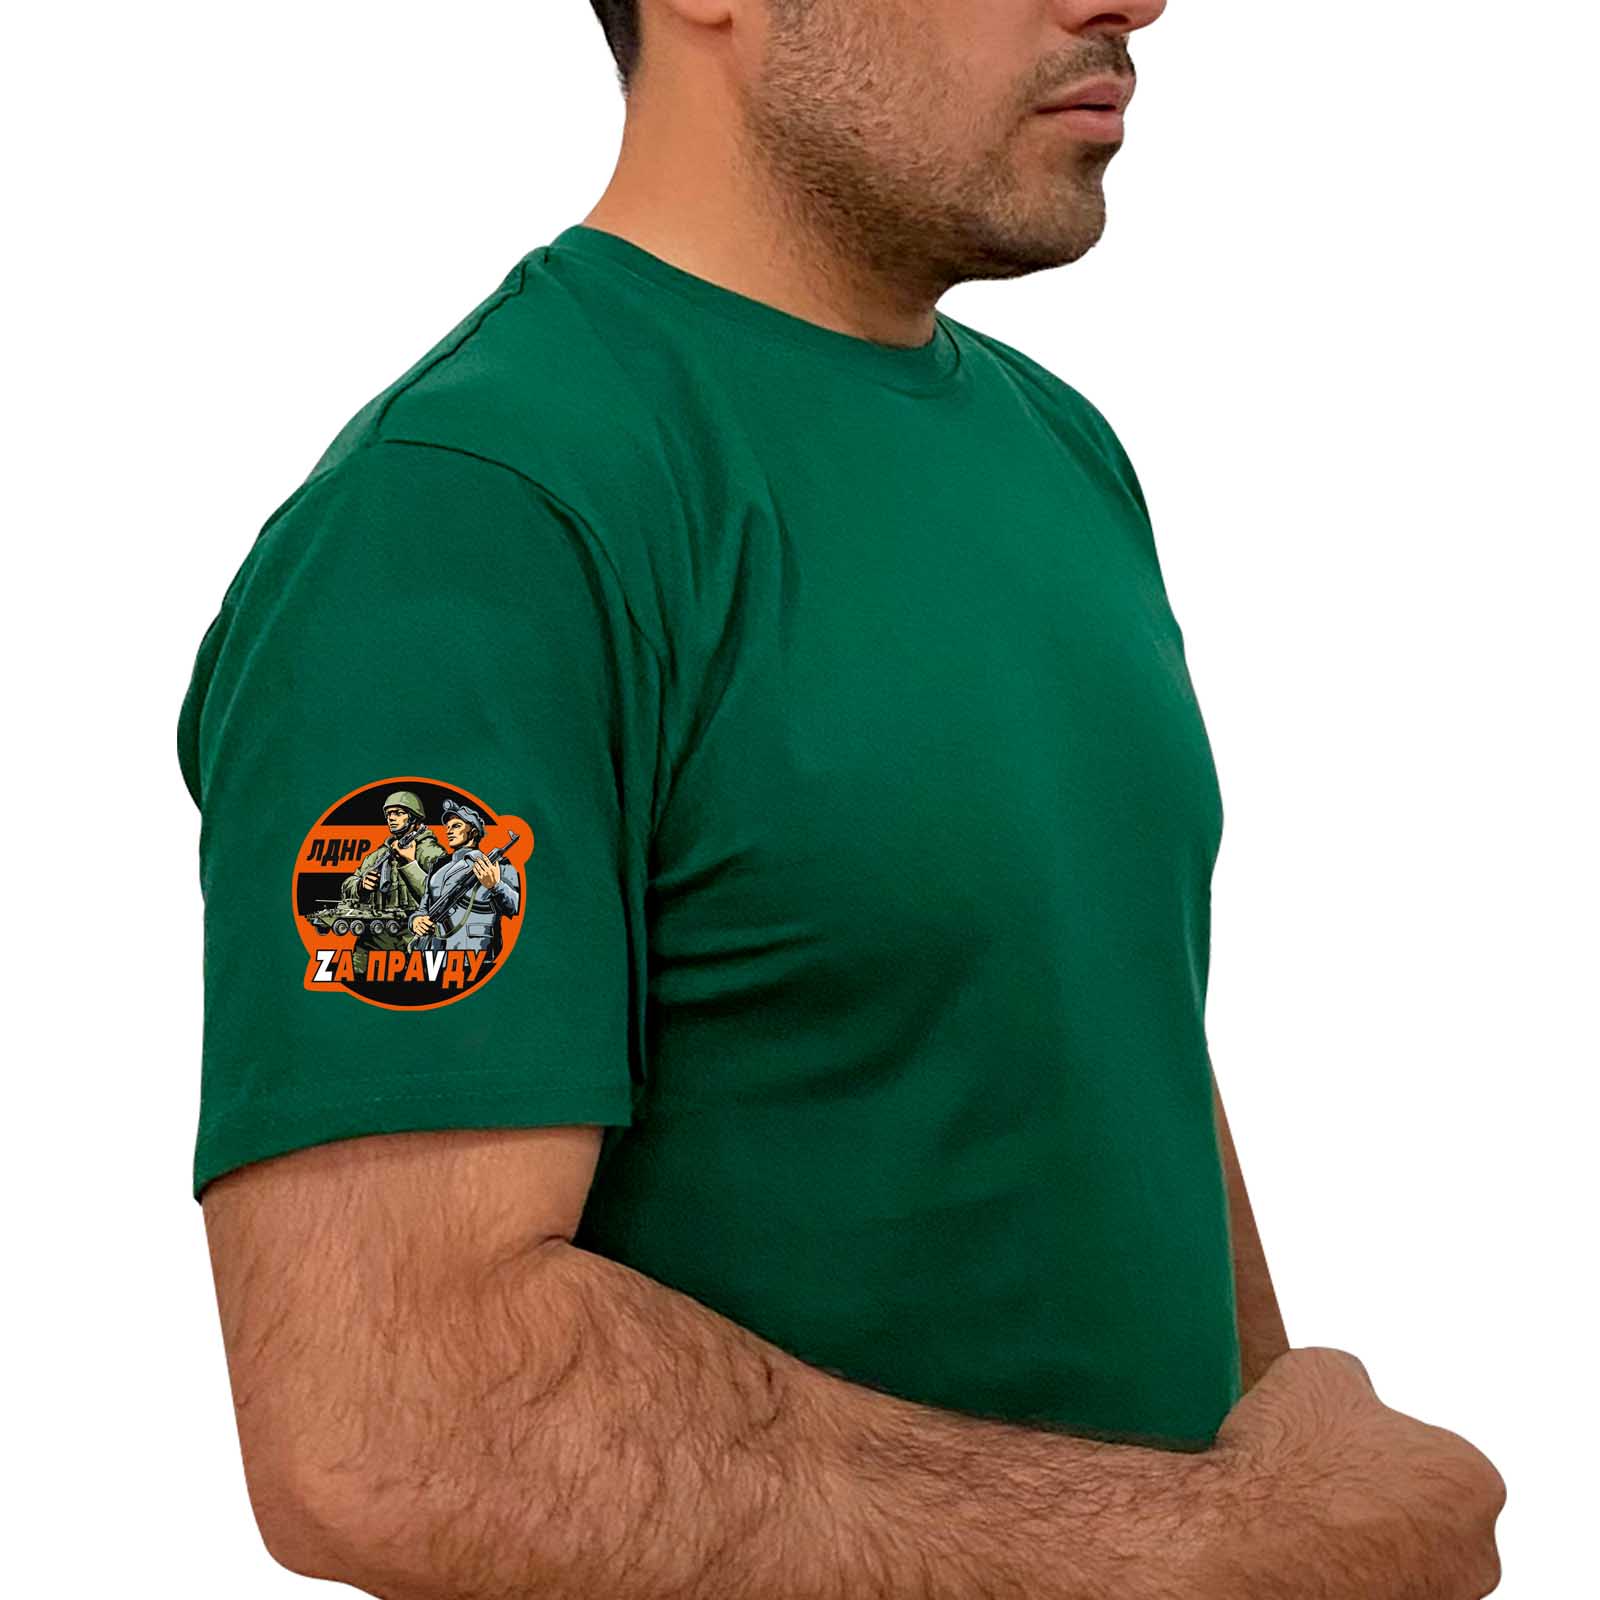 Зелёная футболка с гвардейским термотрансфером ЛДНР "Zа праVду" на рукаве